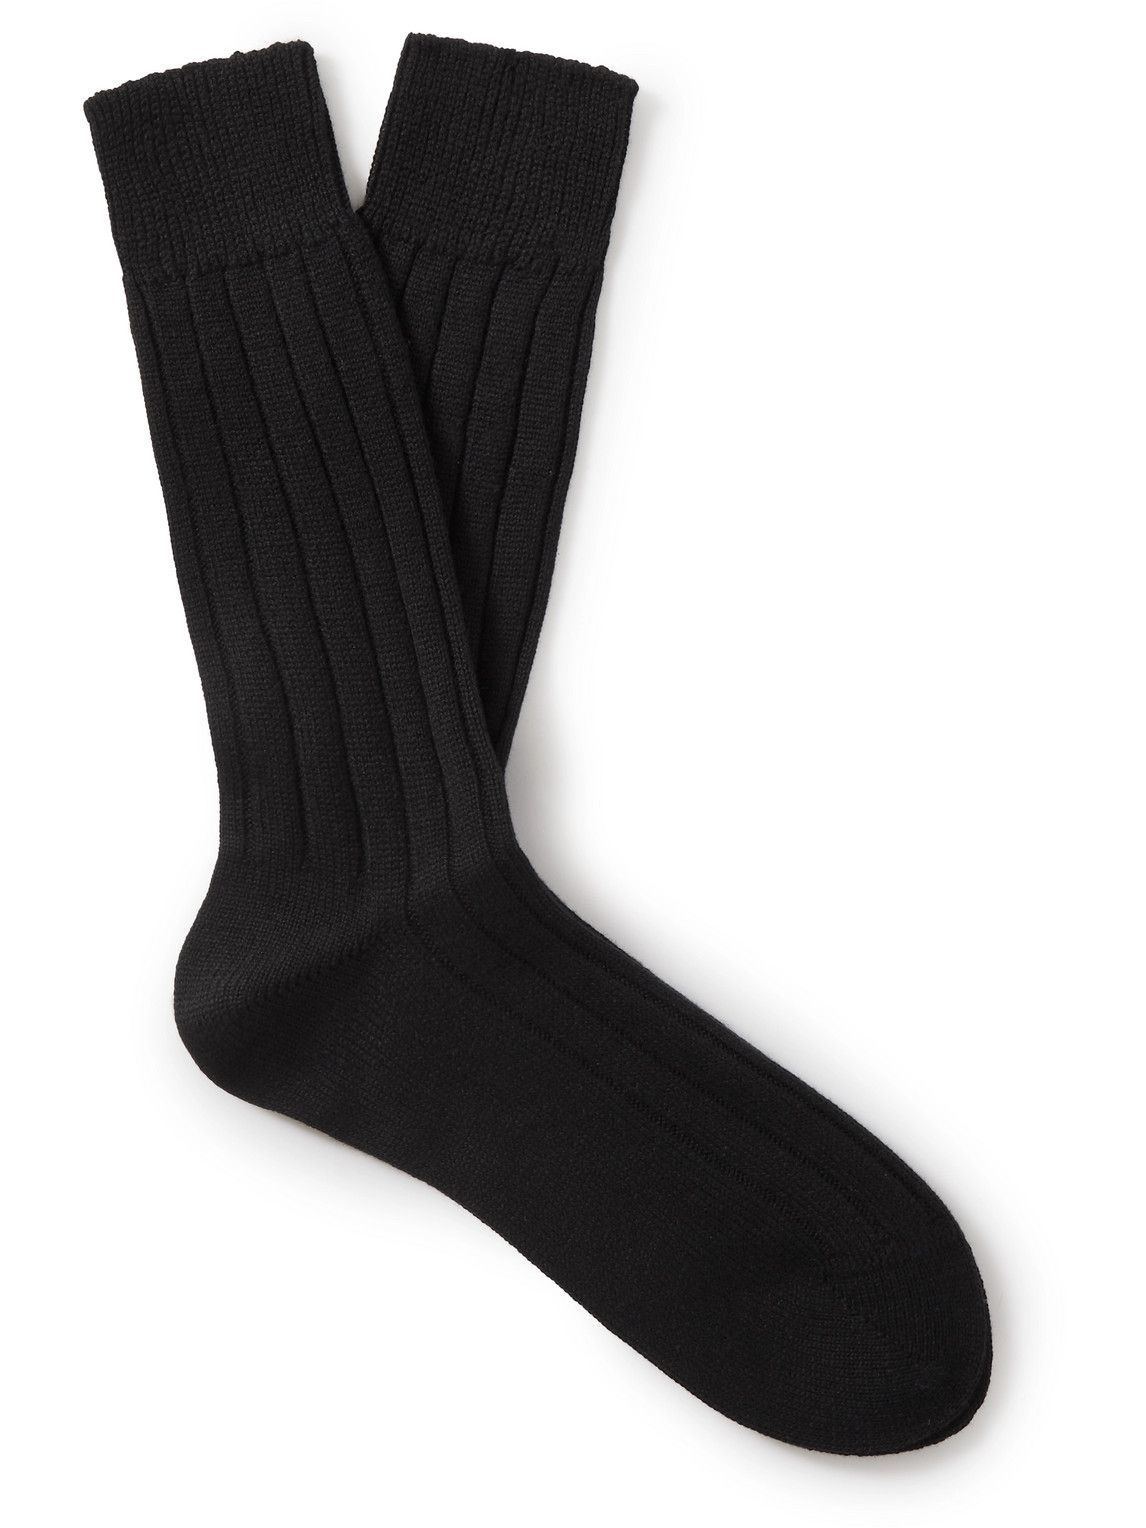 TOM FORD - Ribbed Cashmere Socks - Black TOM FORD